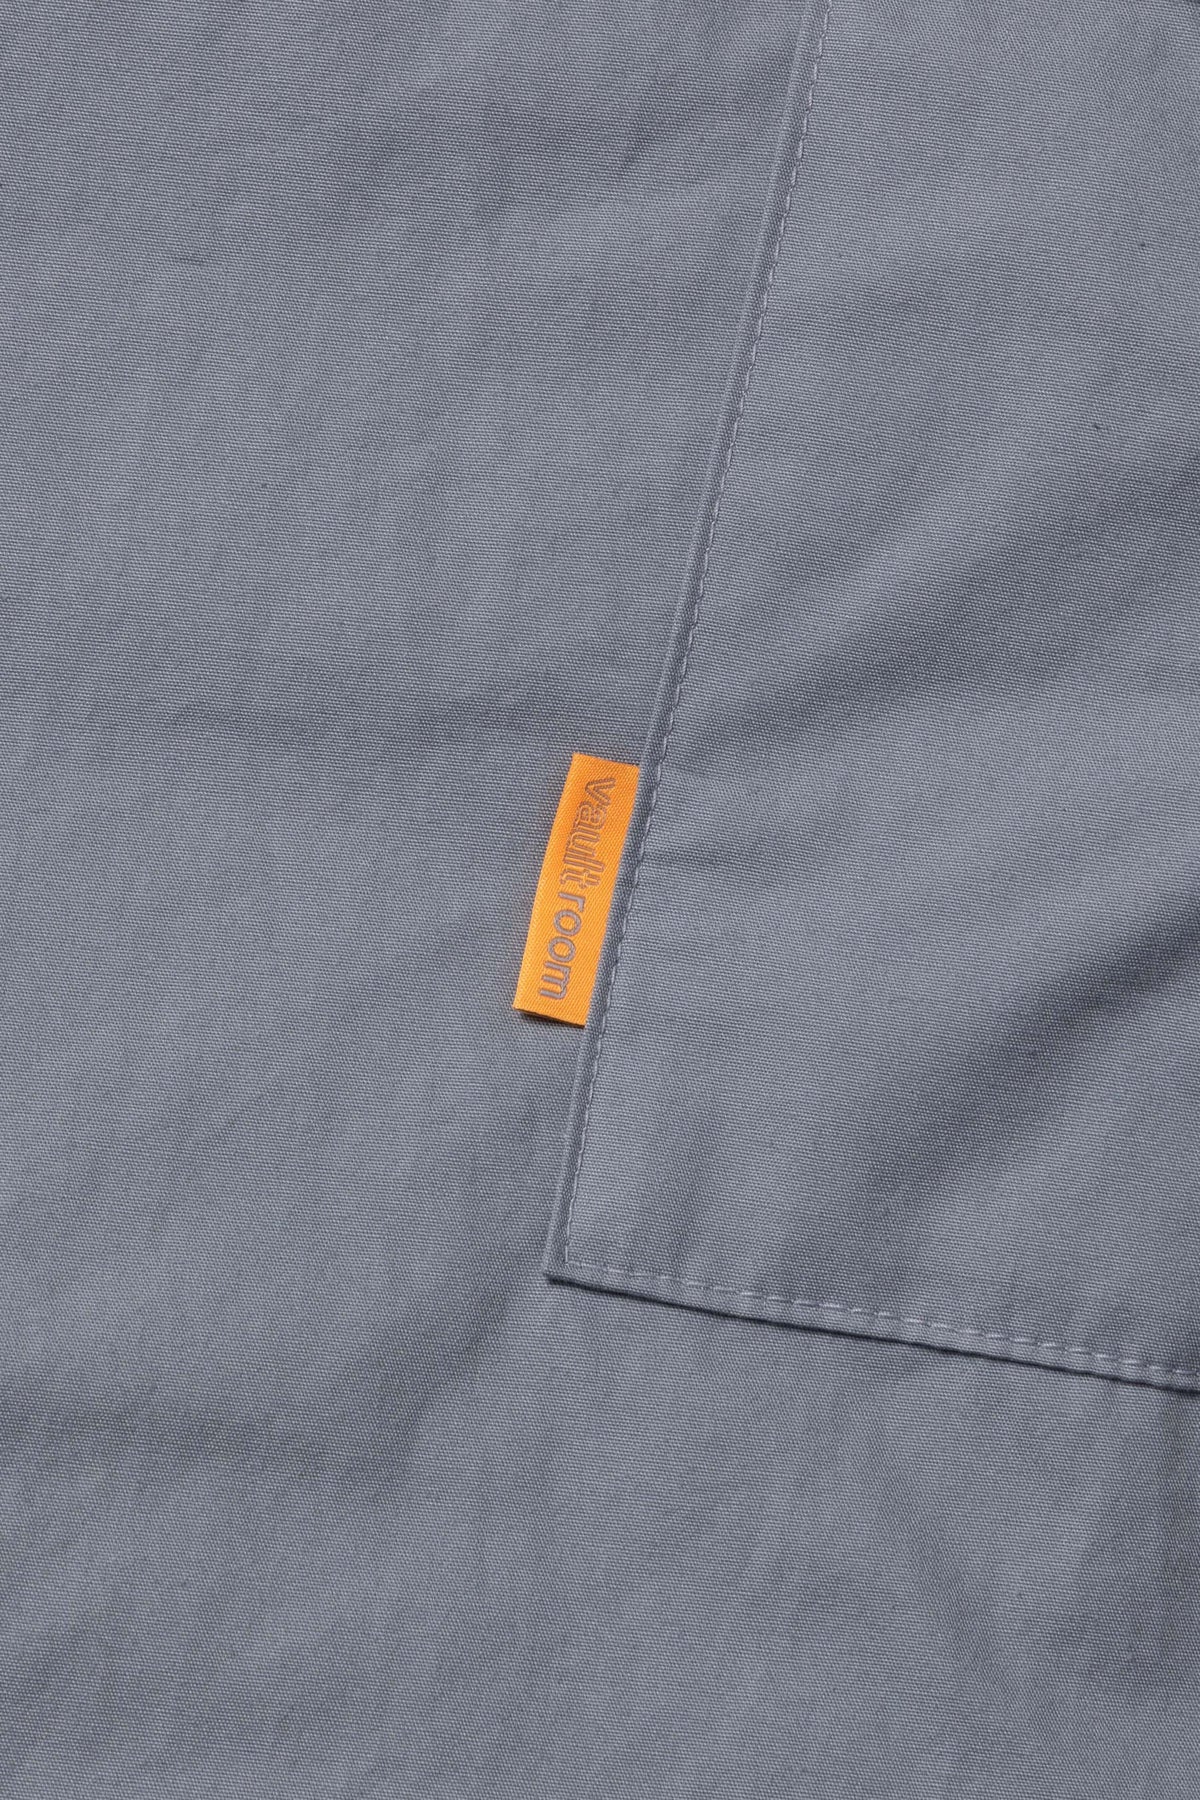 Vaultroom Gaming cargo pants /blue grayパンツ